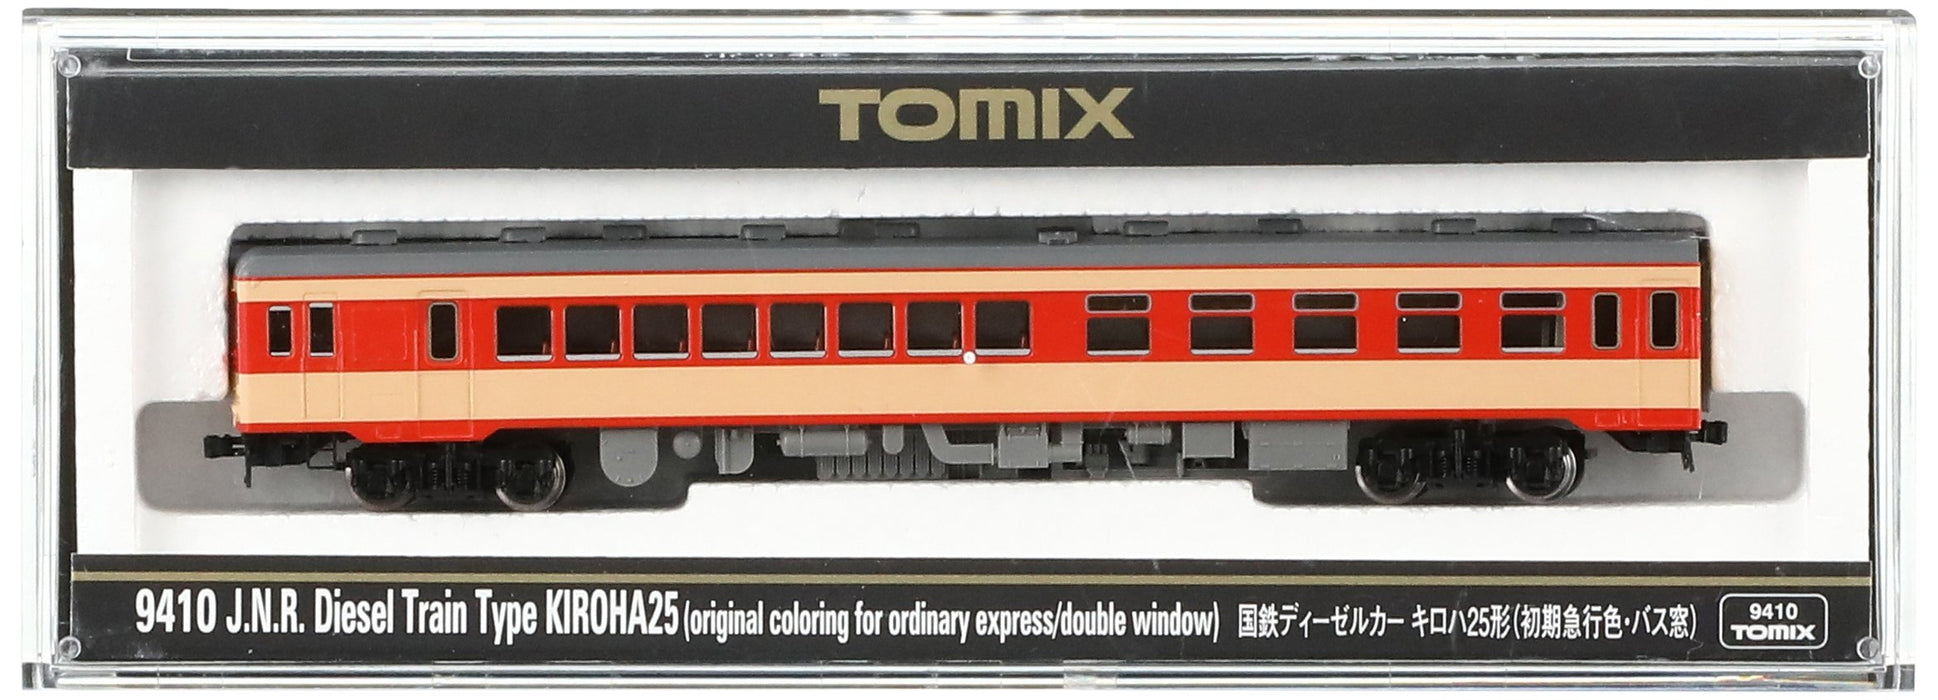 Tomytec Tomix N Gauge Kiroha 25 Early Express Railway Model Diesel Car 9410